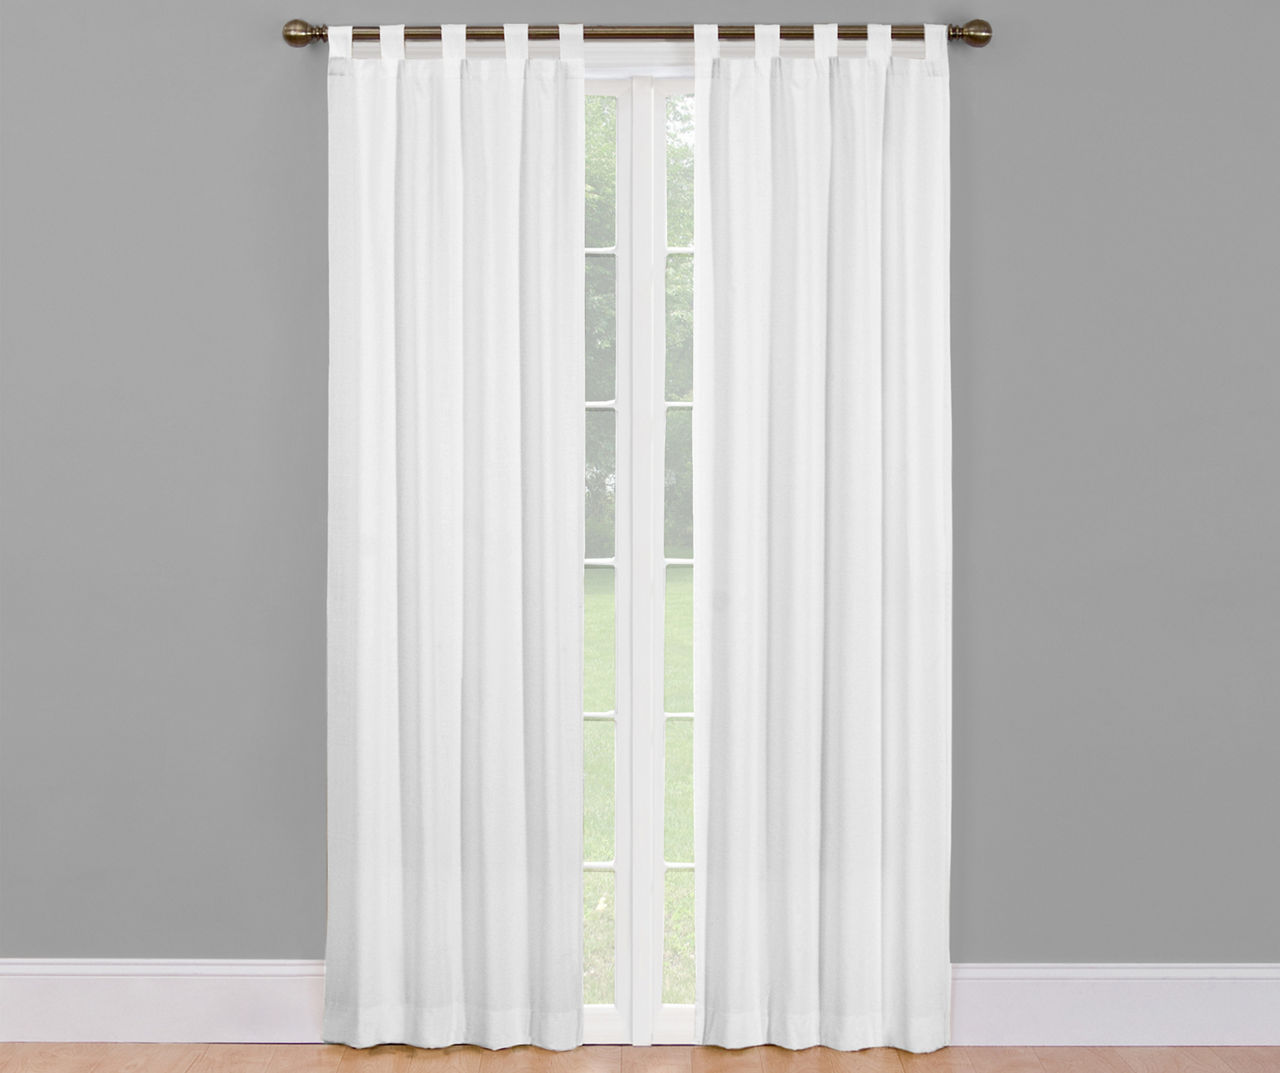 Colorado Caelen White Curtain Panel Pair, (84")